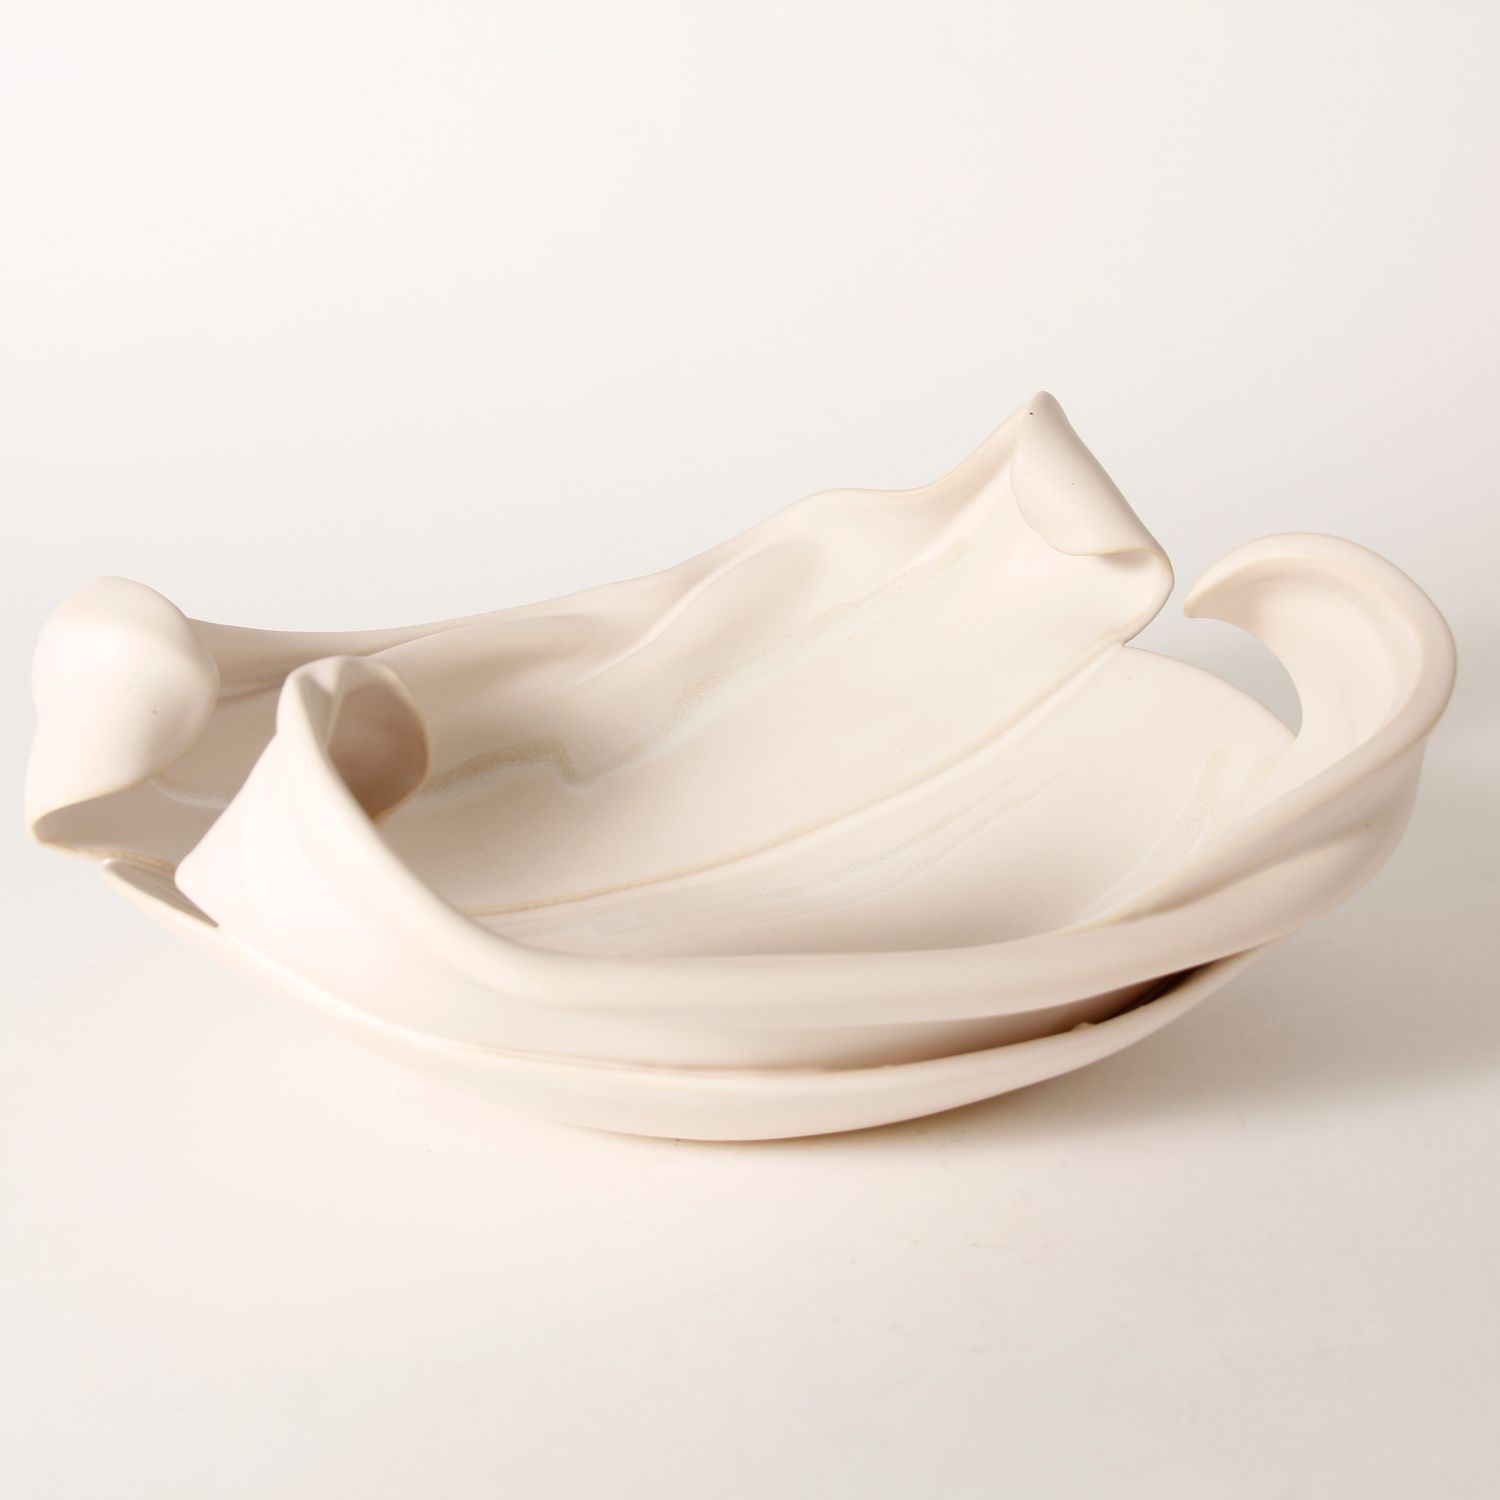 Nancy Macnaughton Hilborn: Curly Bowl Product Image 1 of 5